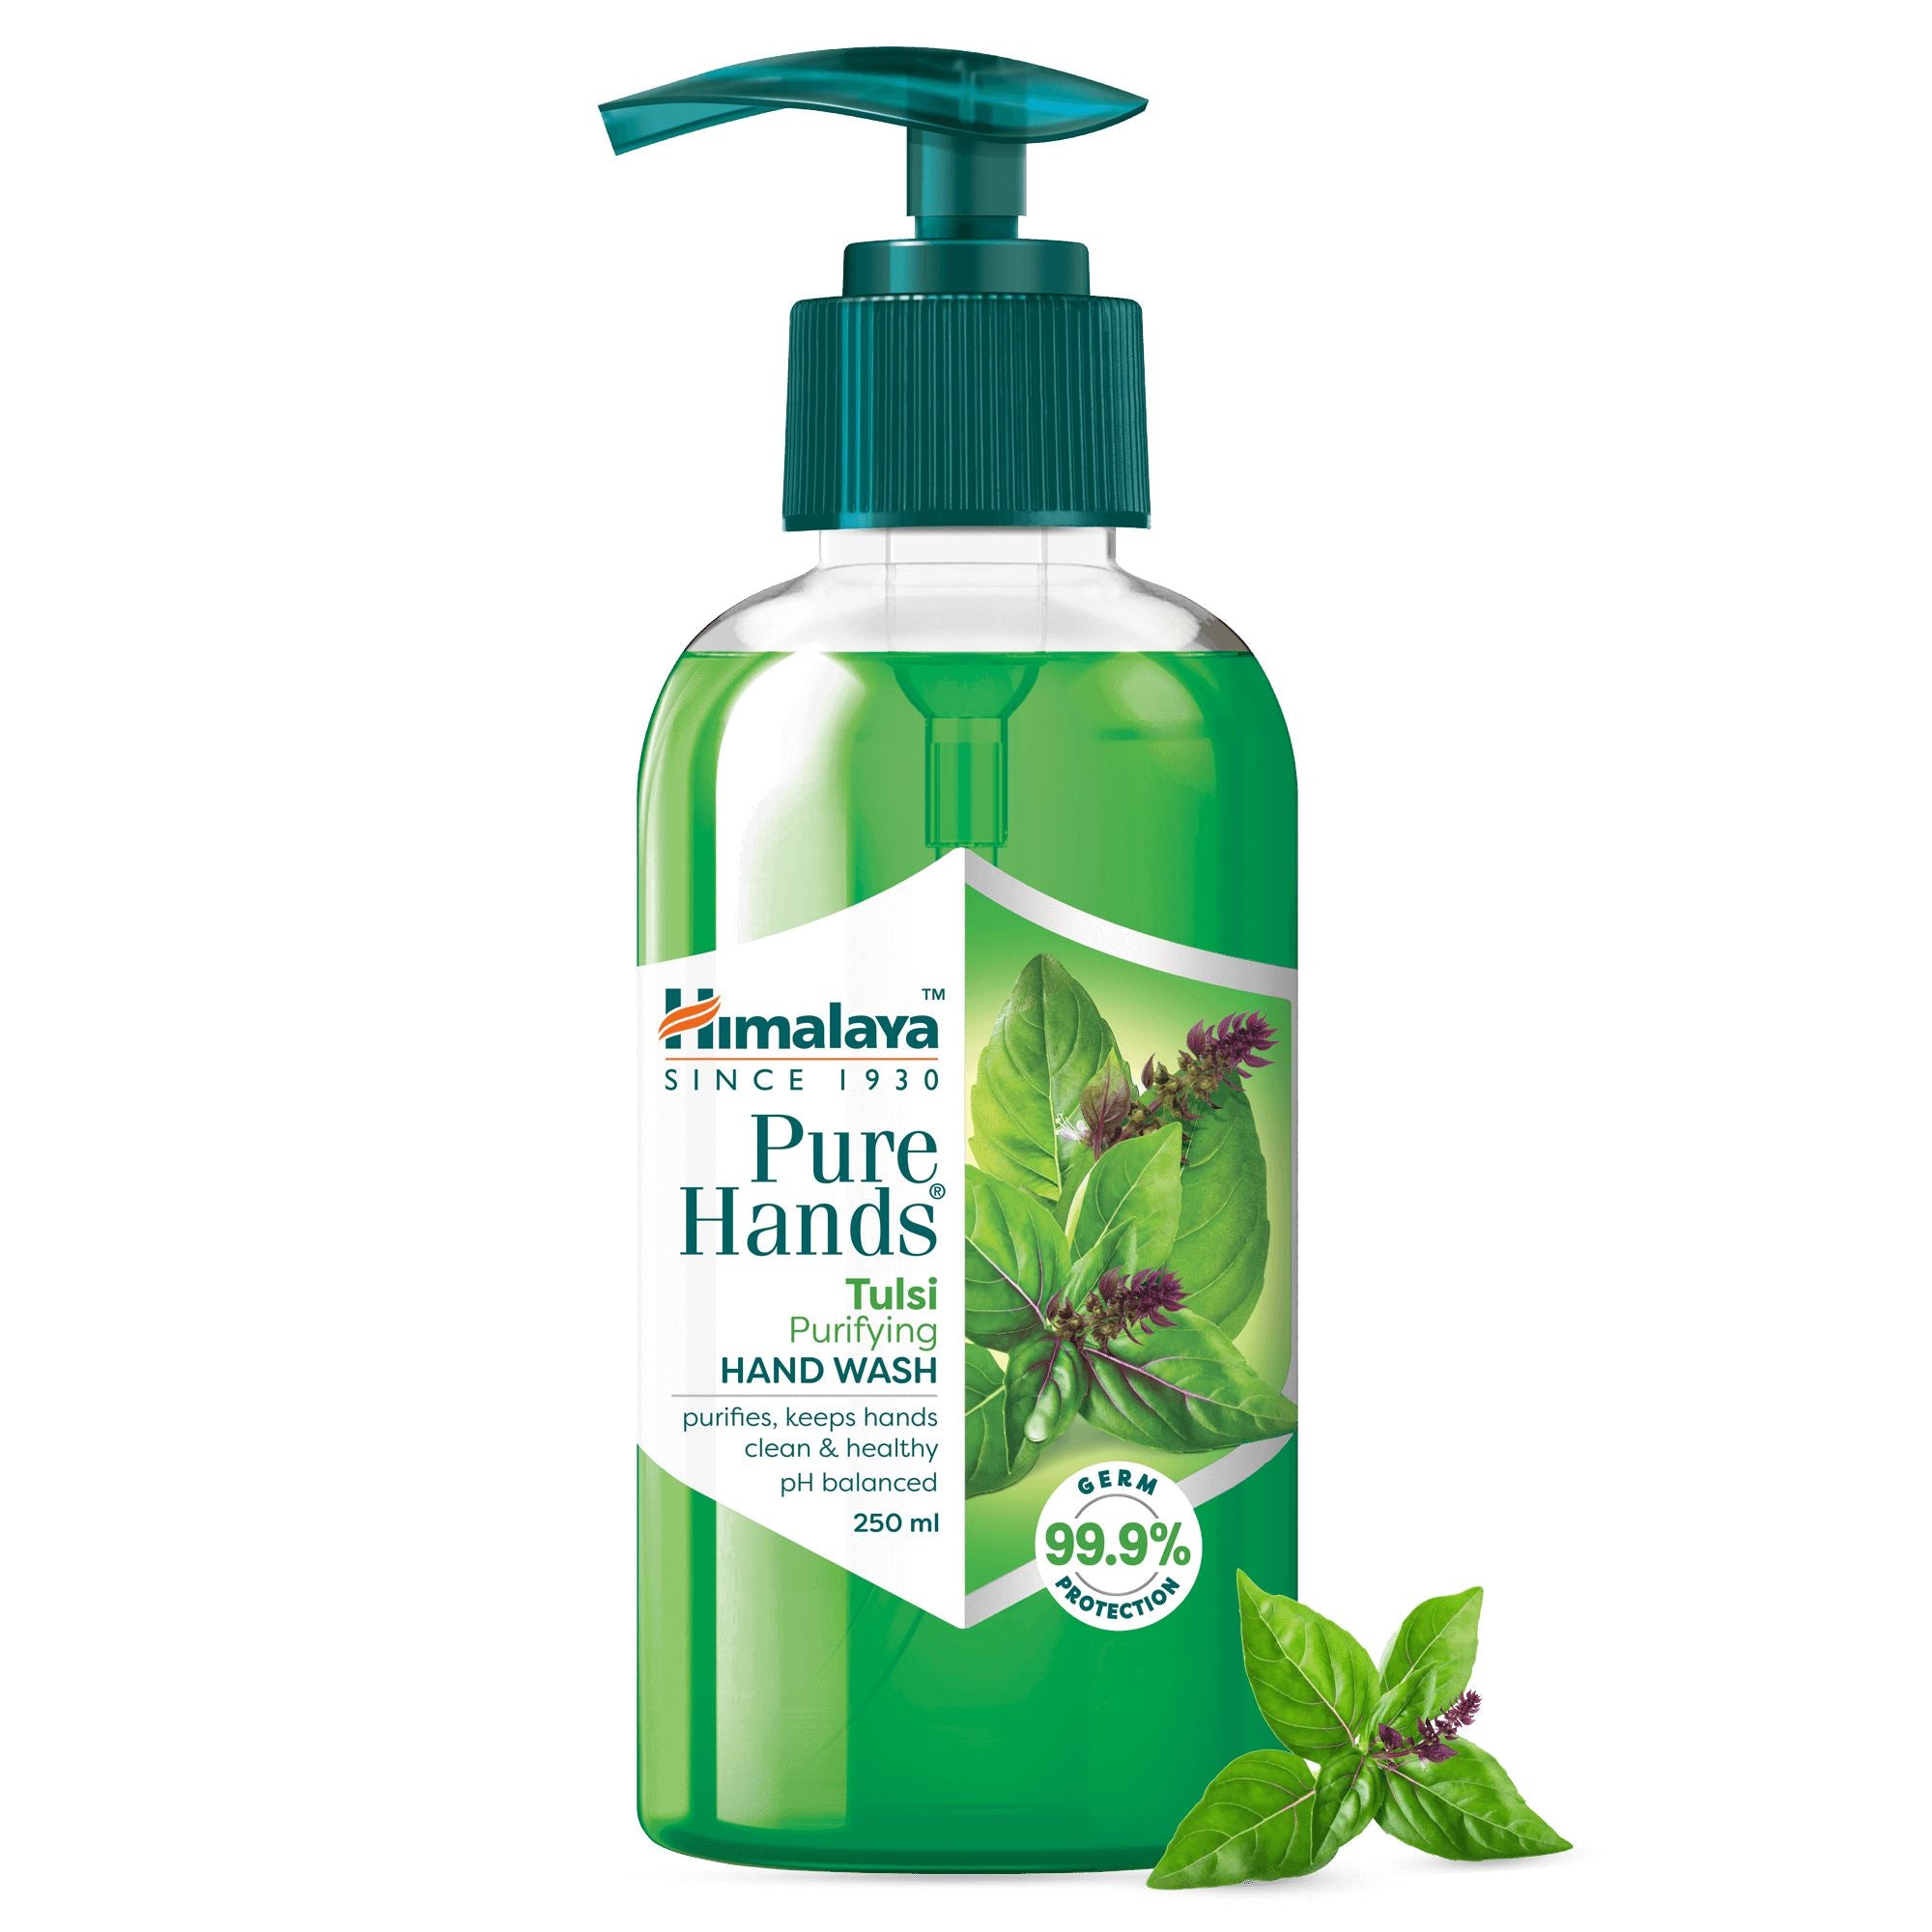 Himalaya Pure Hands Tulsi Purifying Hand Wash - Purifies, keeps hands clean and healthy